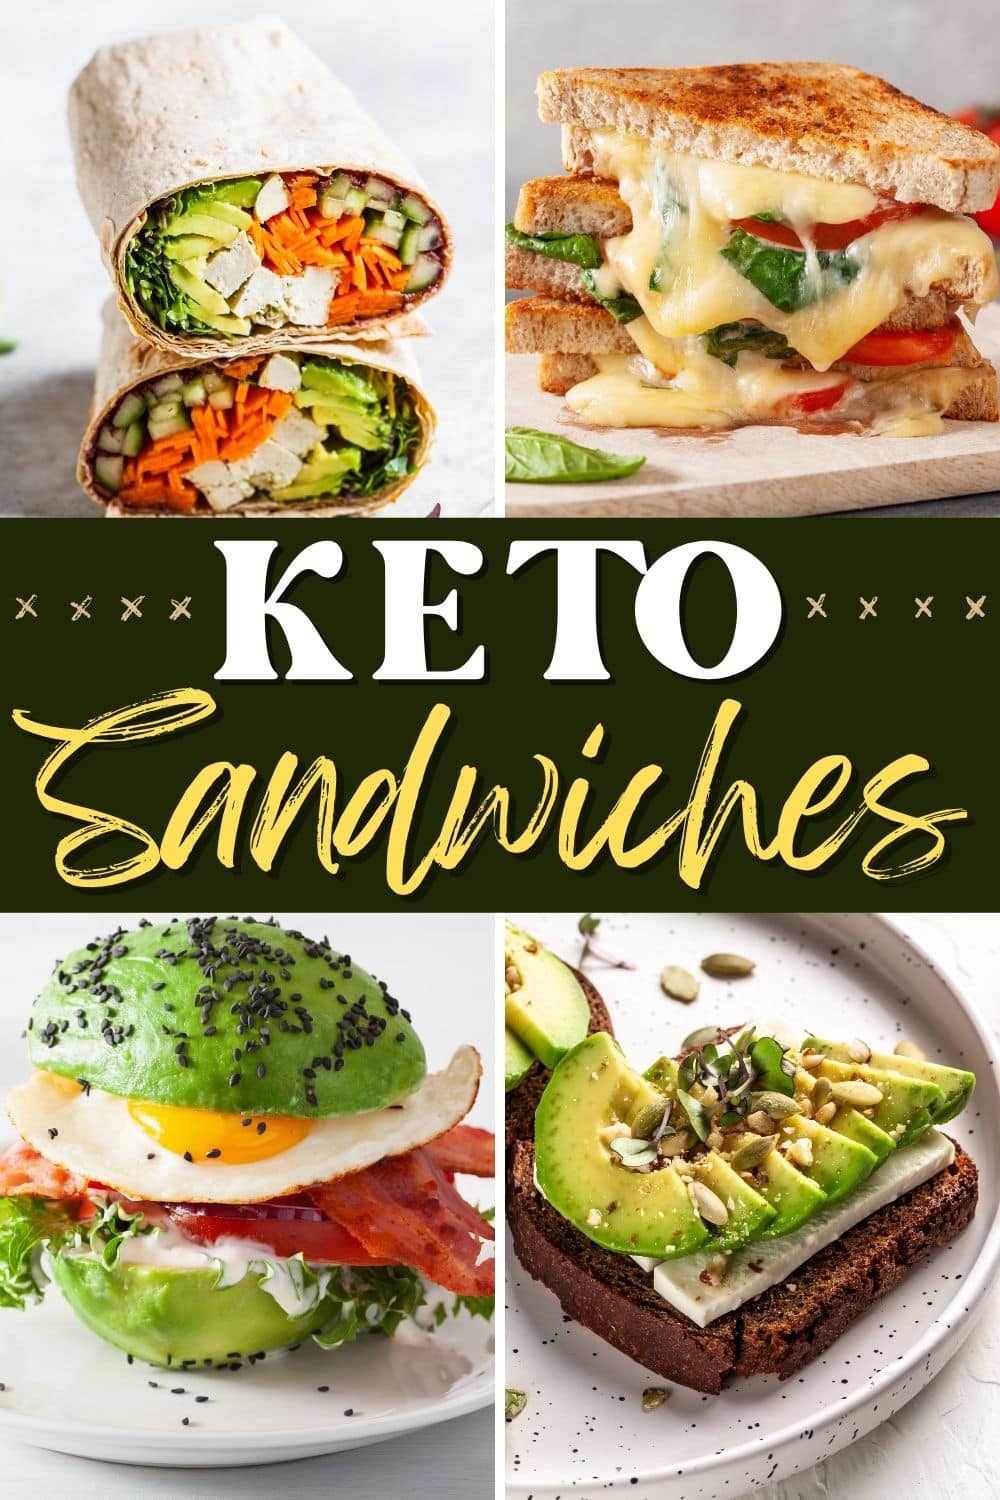 15 Easy Keto Sandwiches - Insanely Good